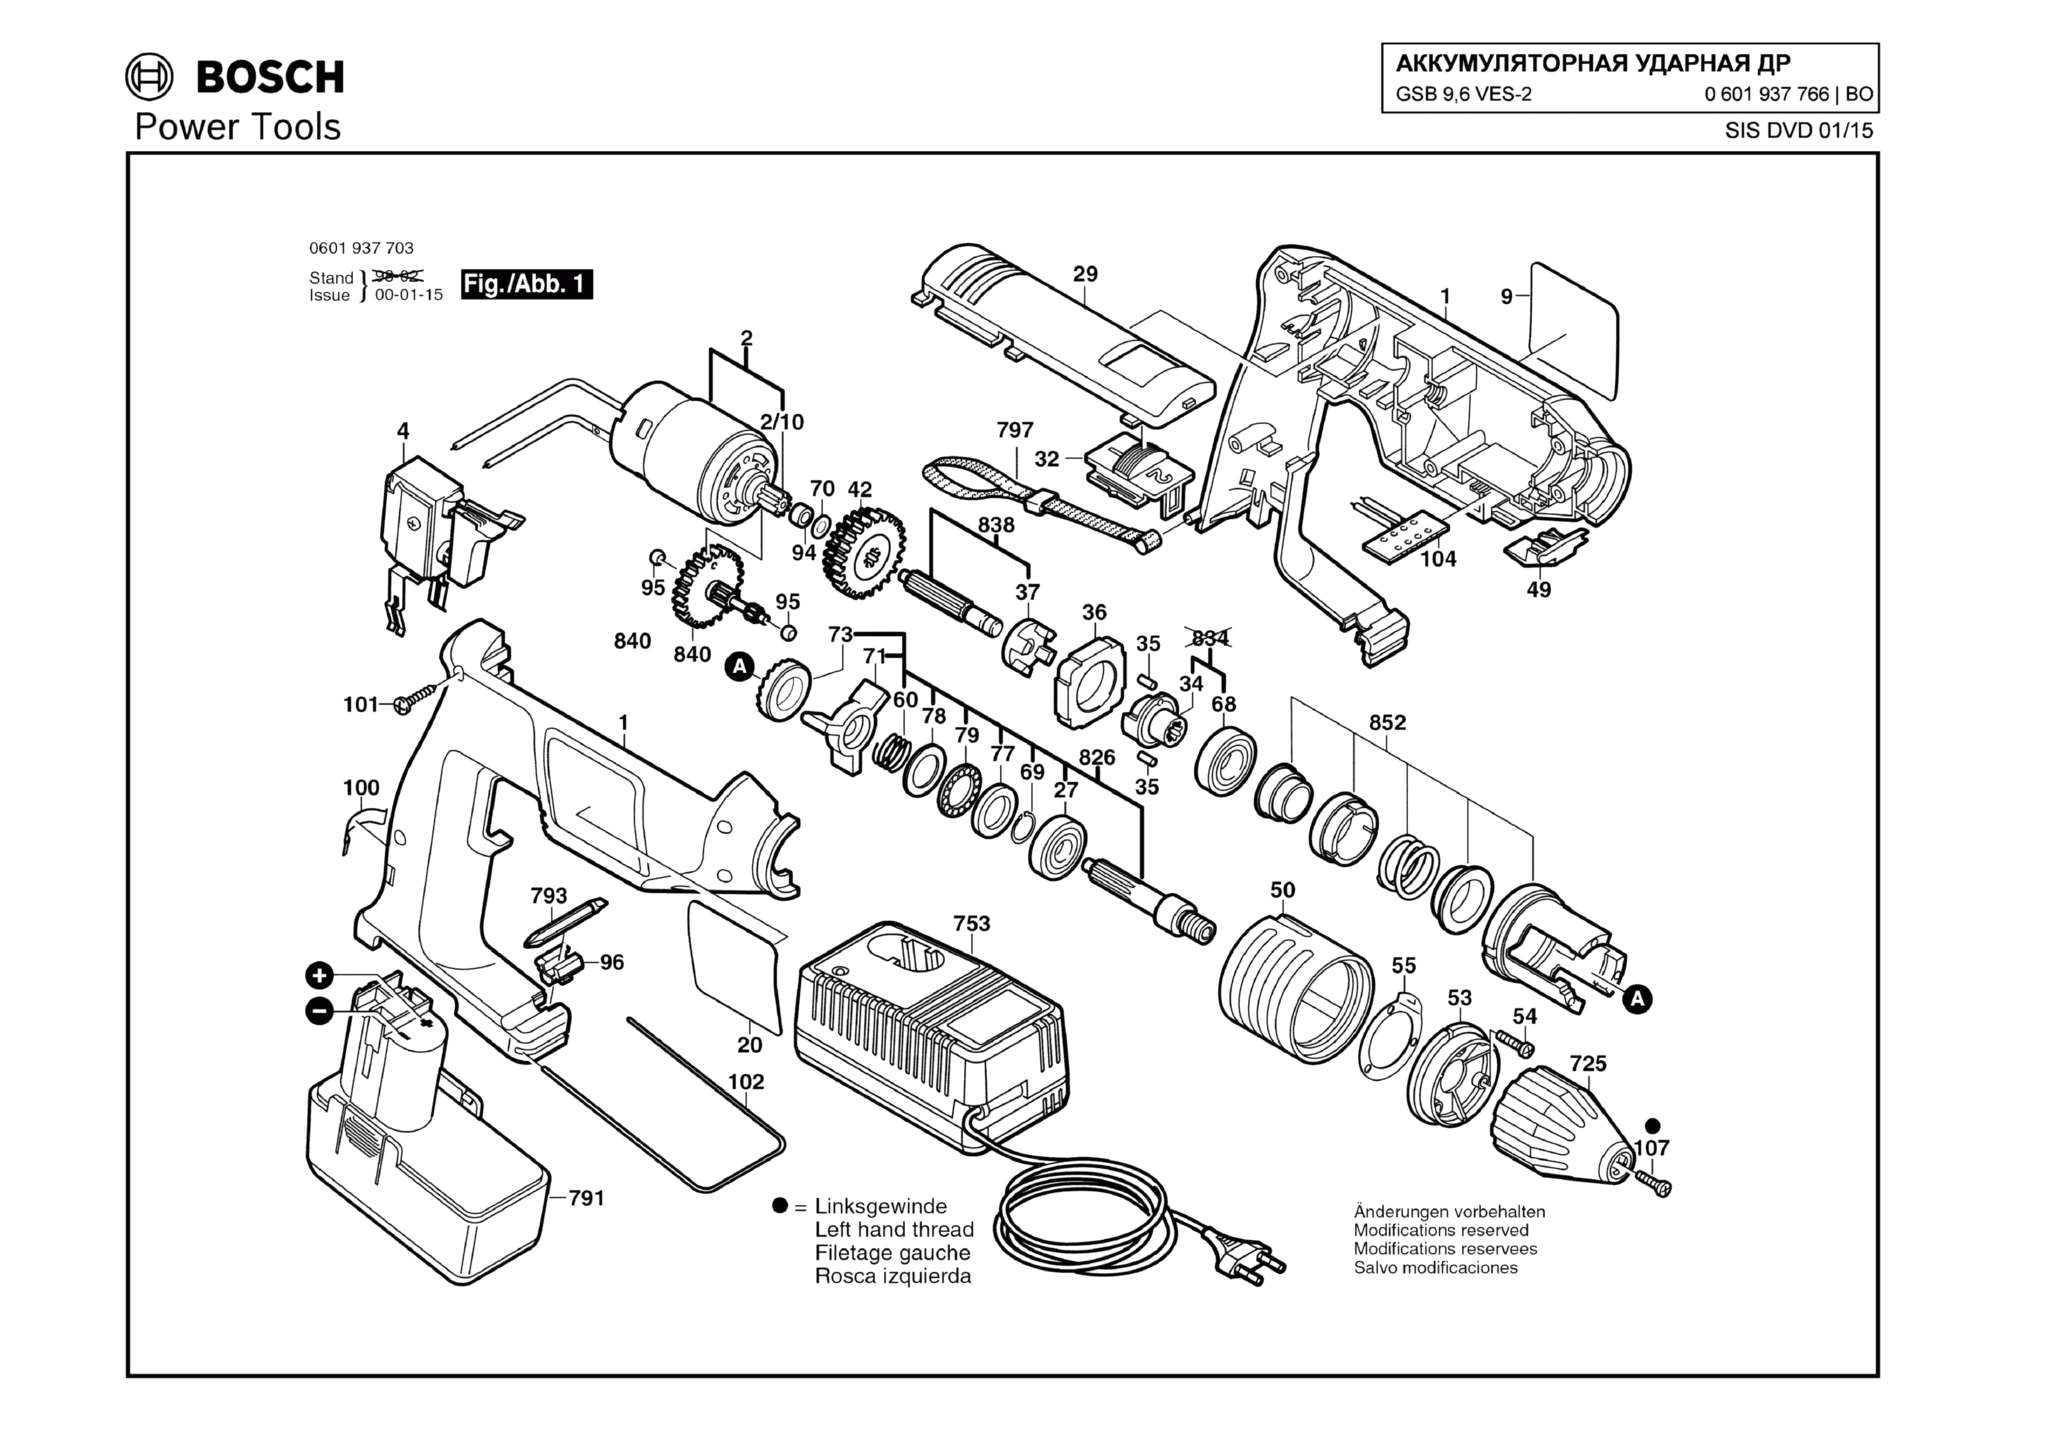 Запчасти, схема и деталировка Bosch GSB 9,6 VES-2 (ТИП 0601937766)